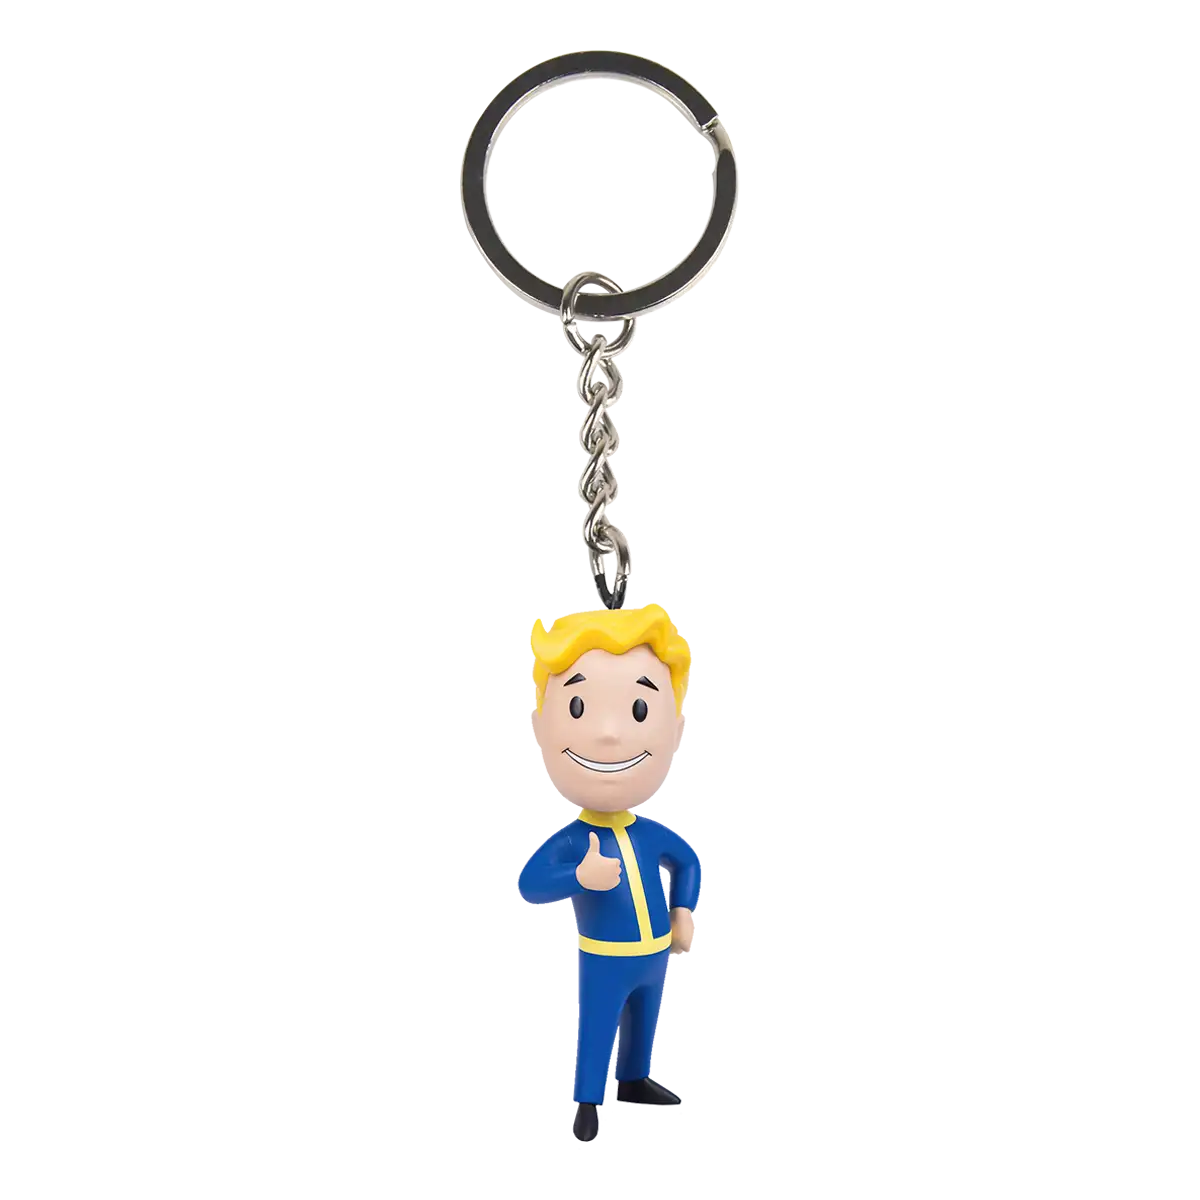 Fallout Keychain "Vault Boy"